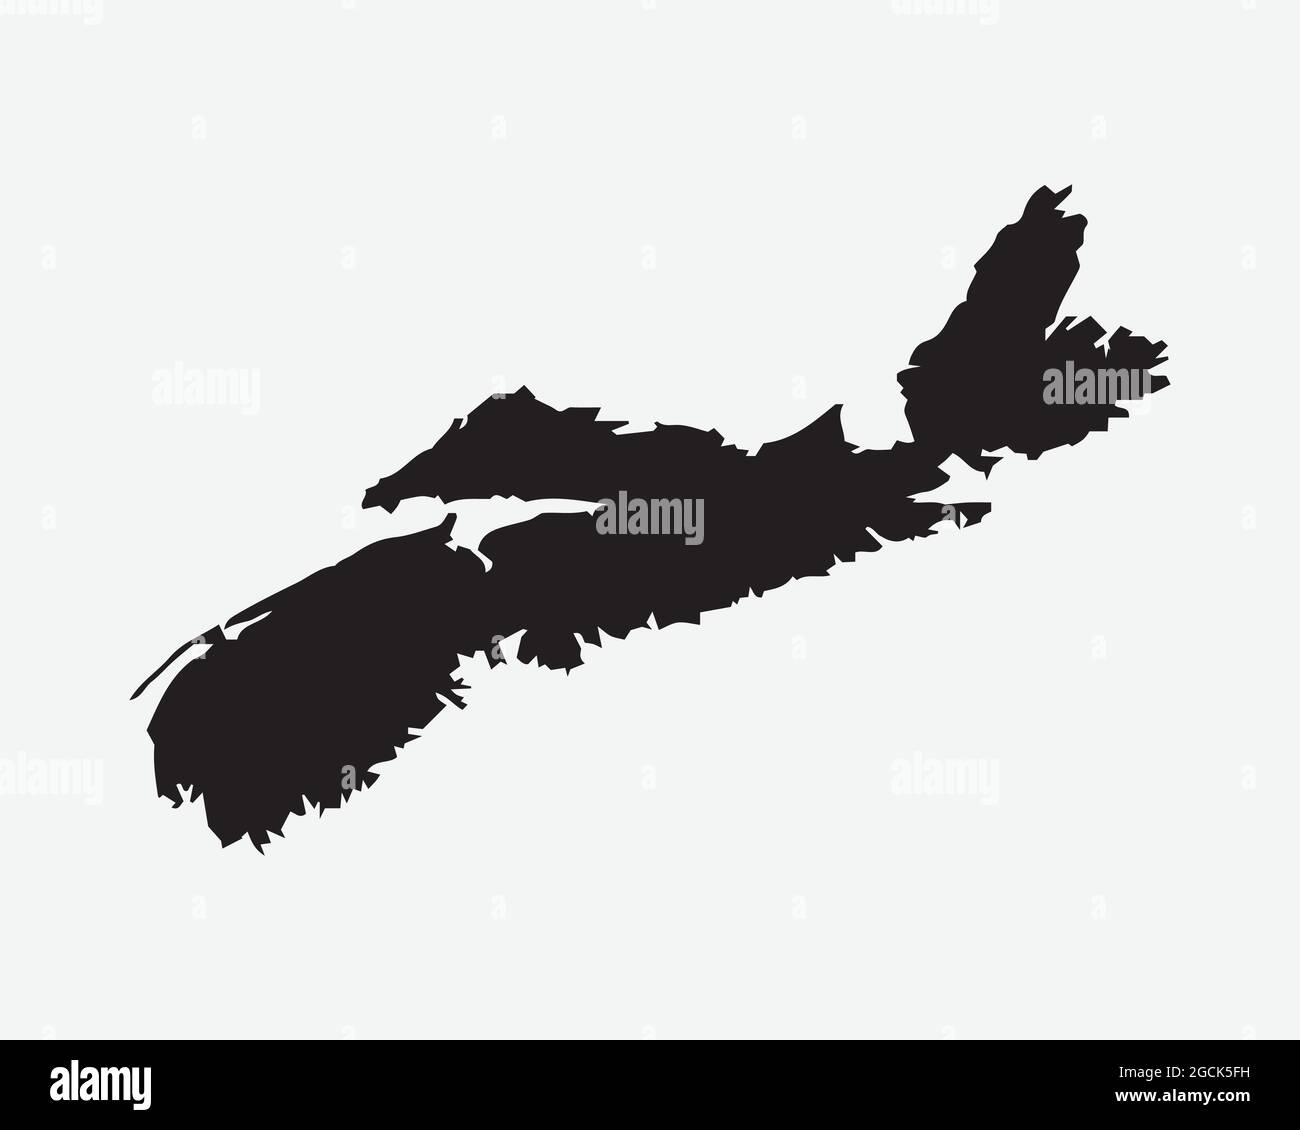 Nova Scotia Kanada Karte Schwarze Silhouette. NS, Canadian Province Shape Geography Atlas Border Boundary. Schwarze Karte auf weißem Hintergrund isoliert. EPS-Ve Stock Vektor